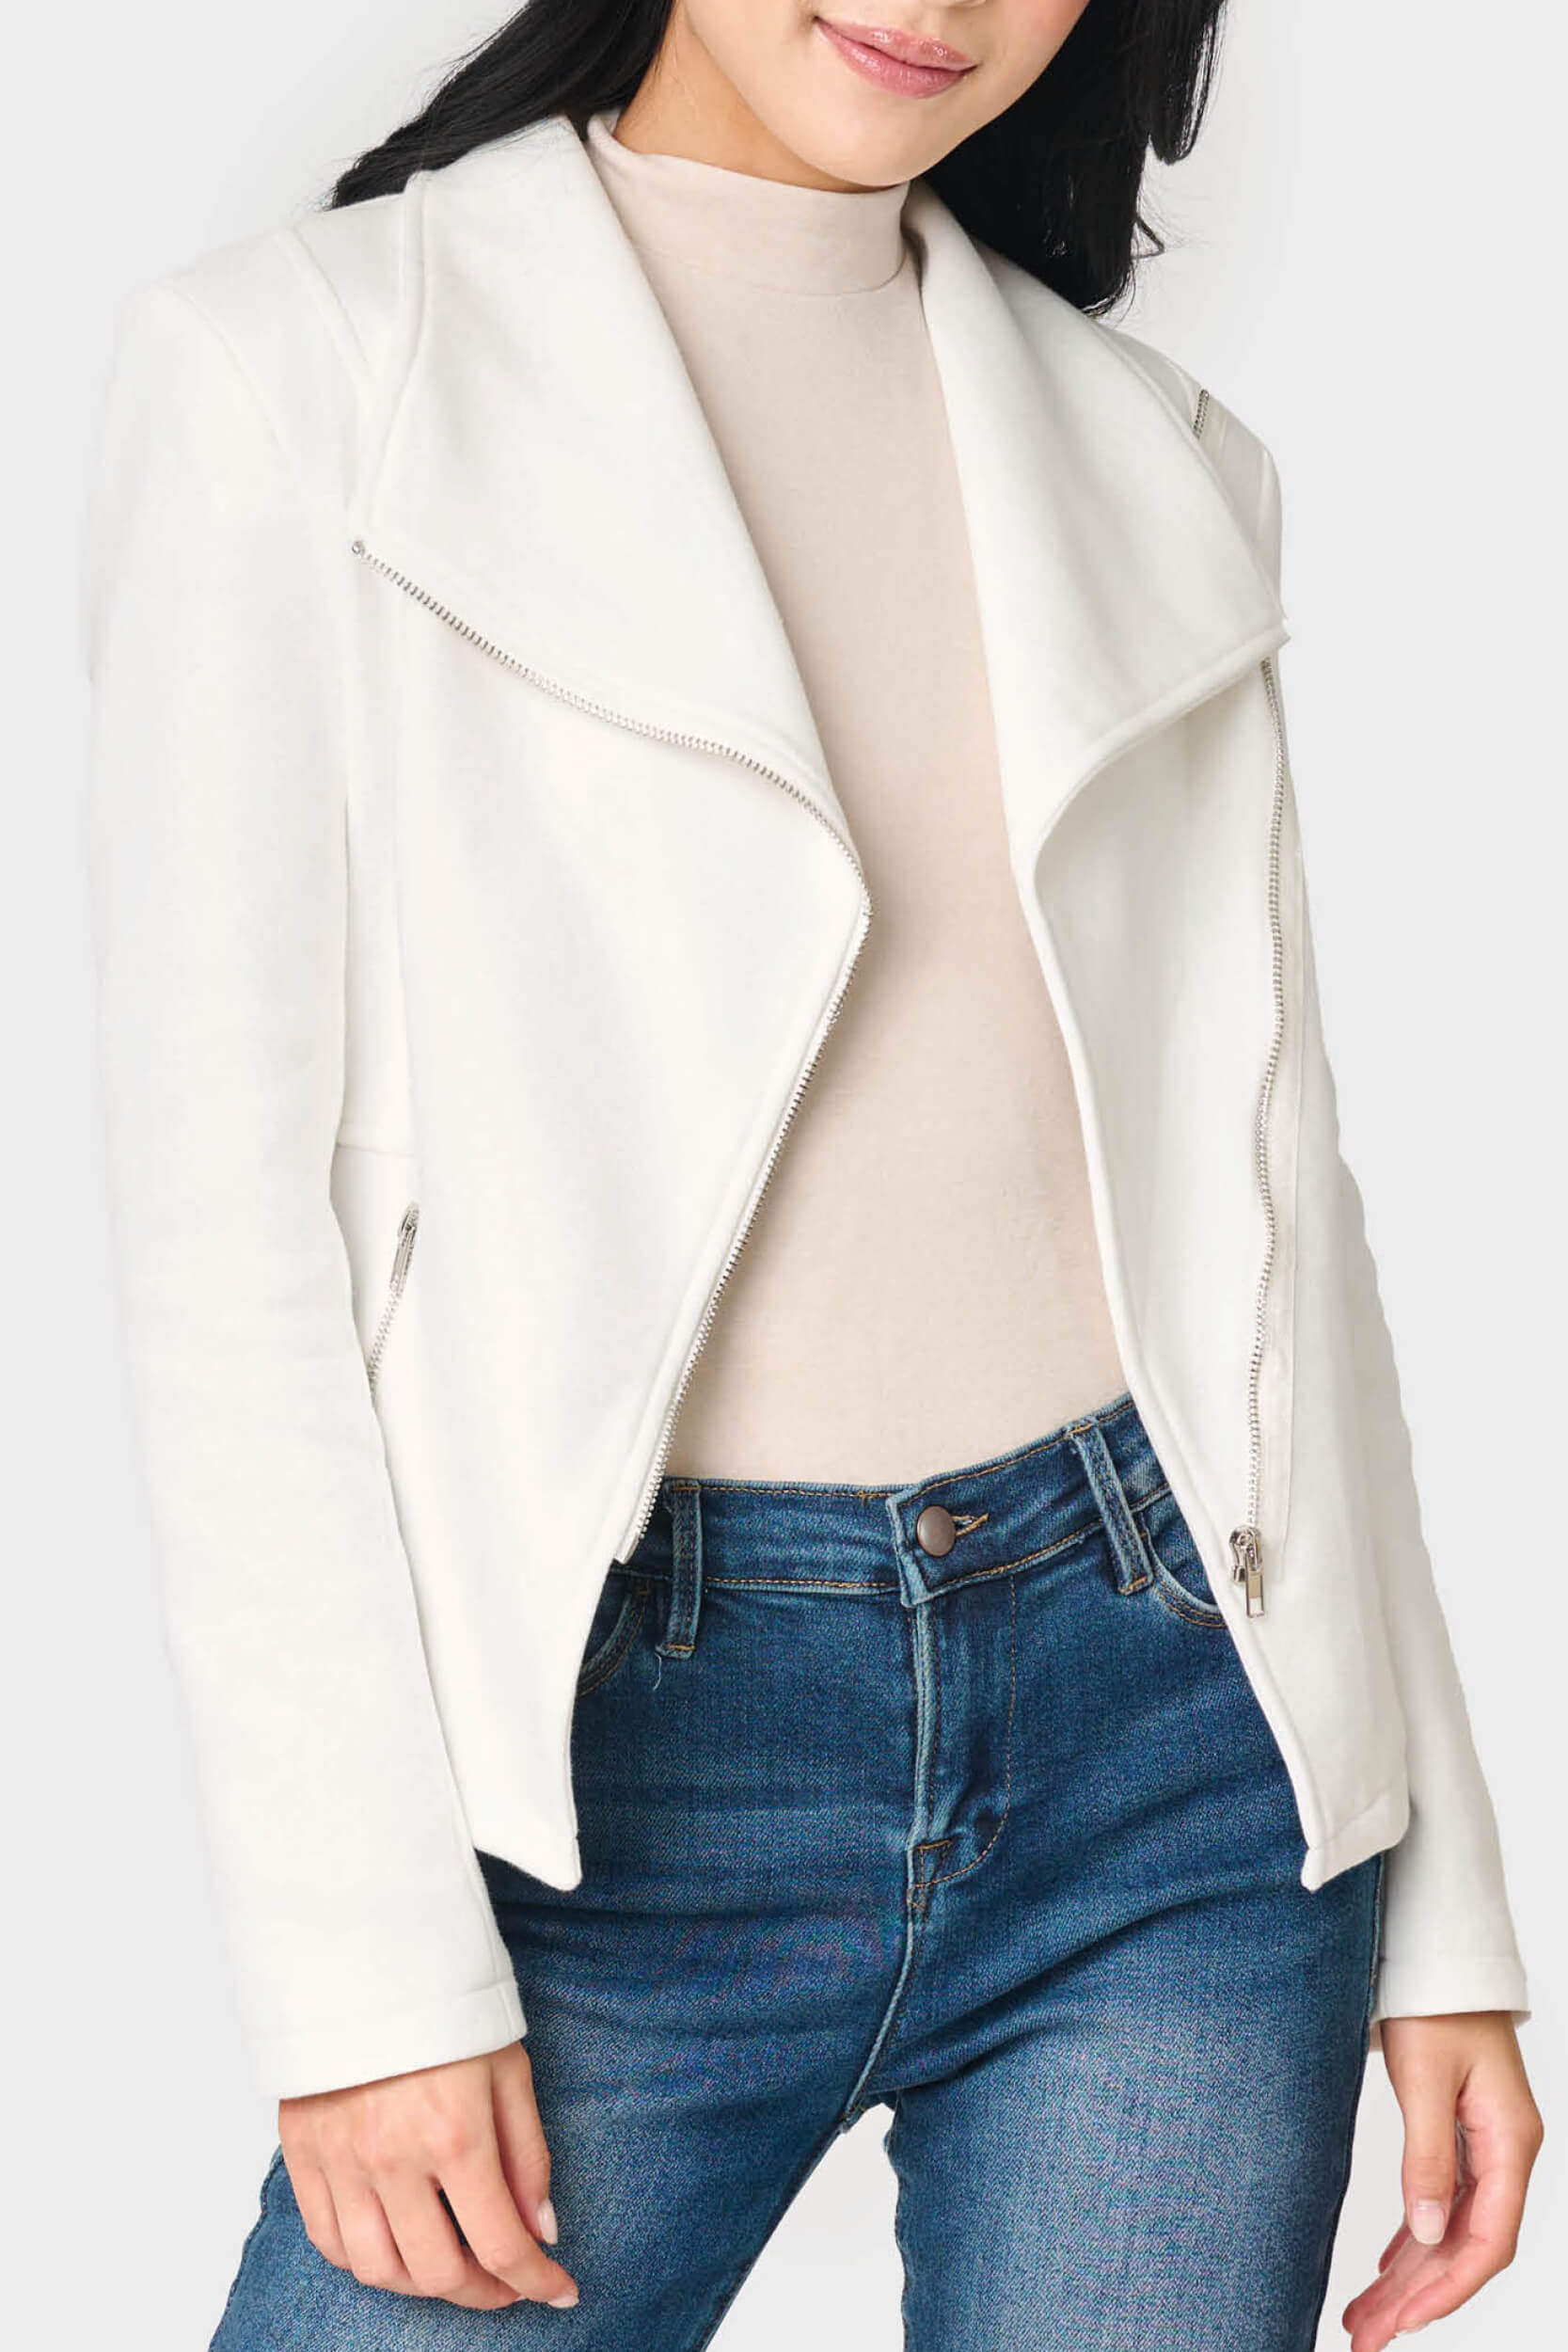 Best Jean Jackets for Women - Denim Jackets to Wear This Fall